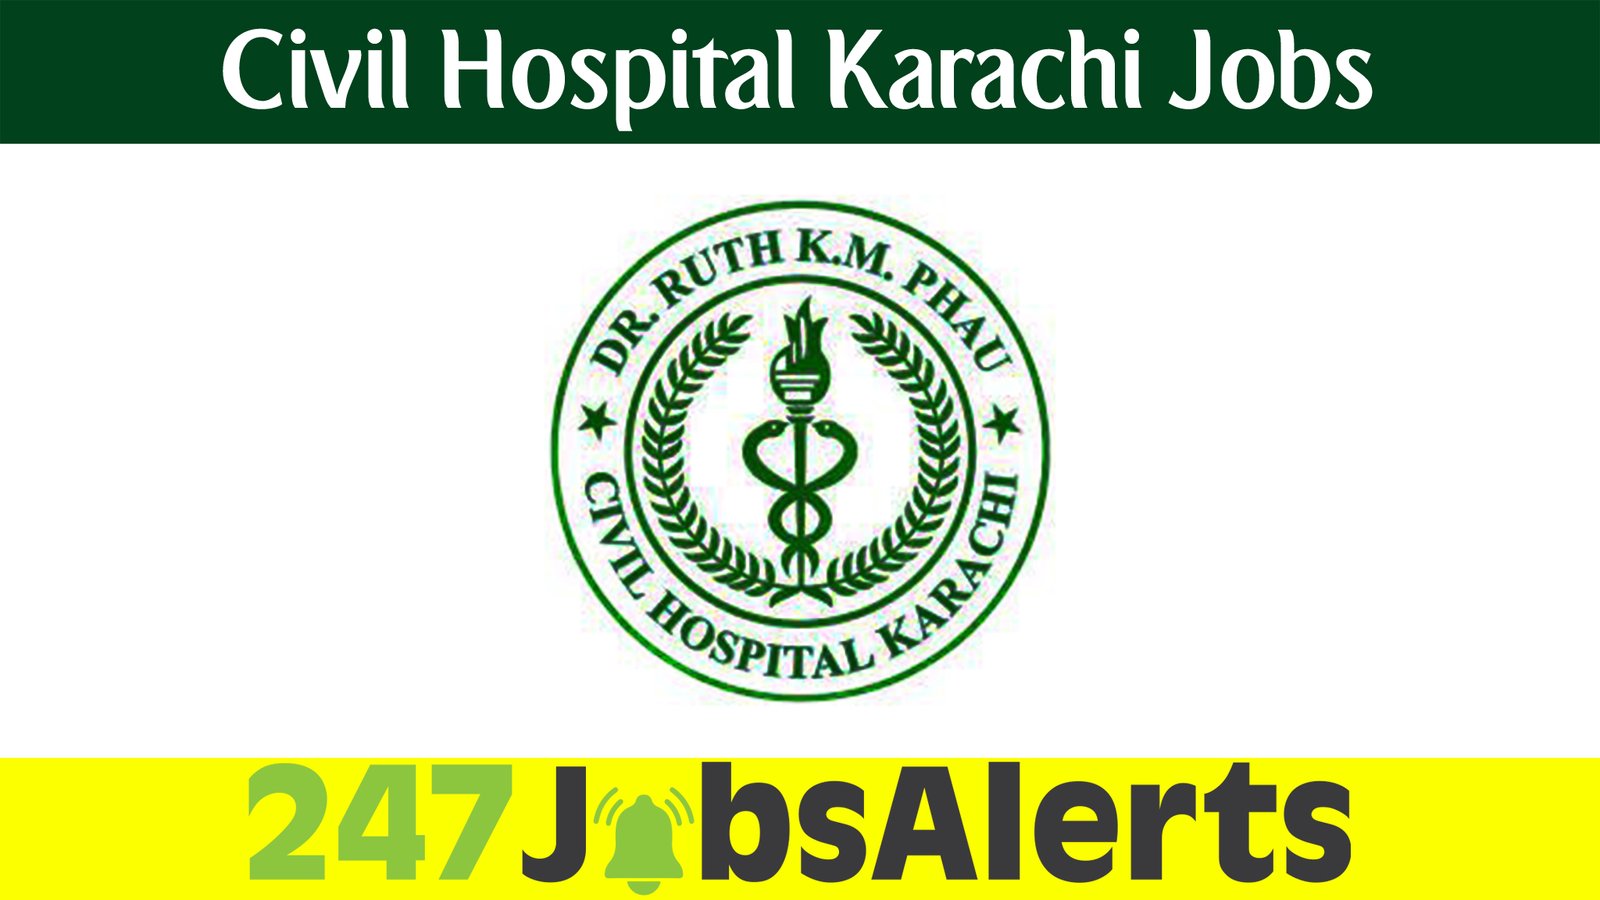 Civil Hospital Karachi Jobs